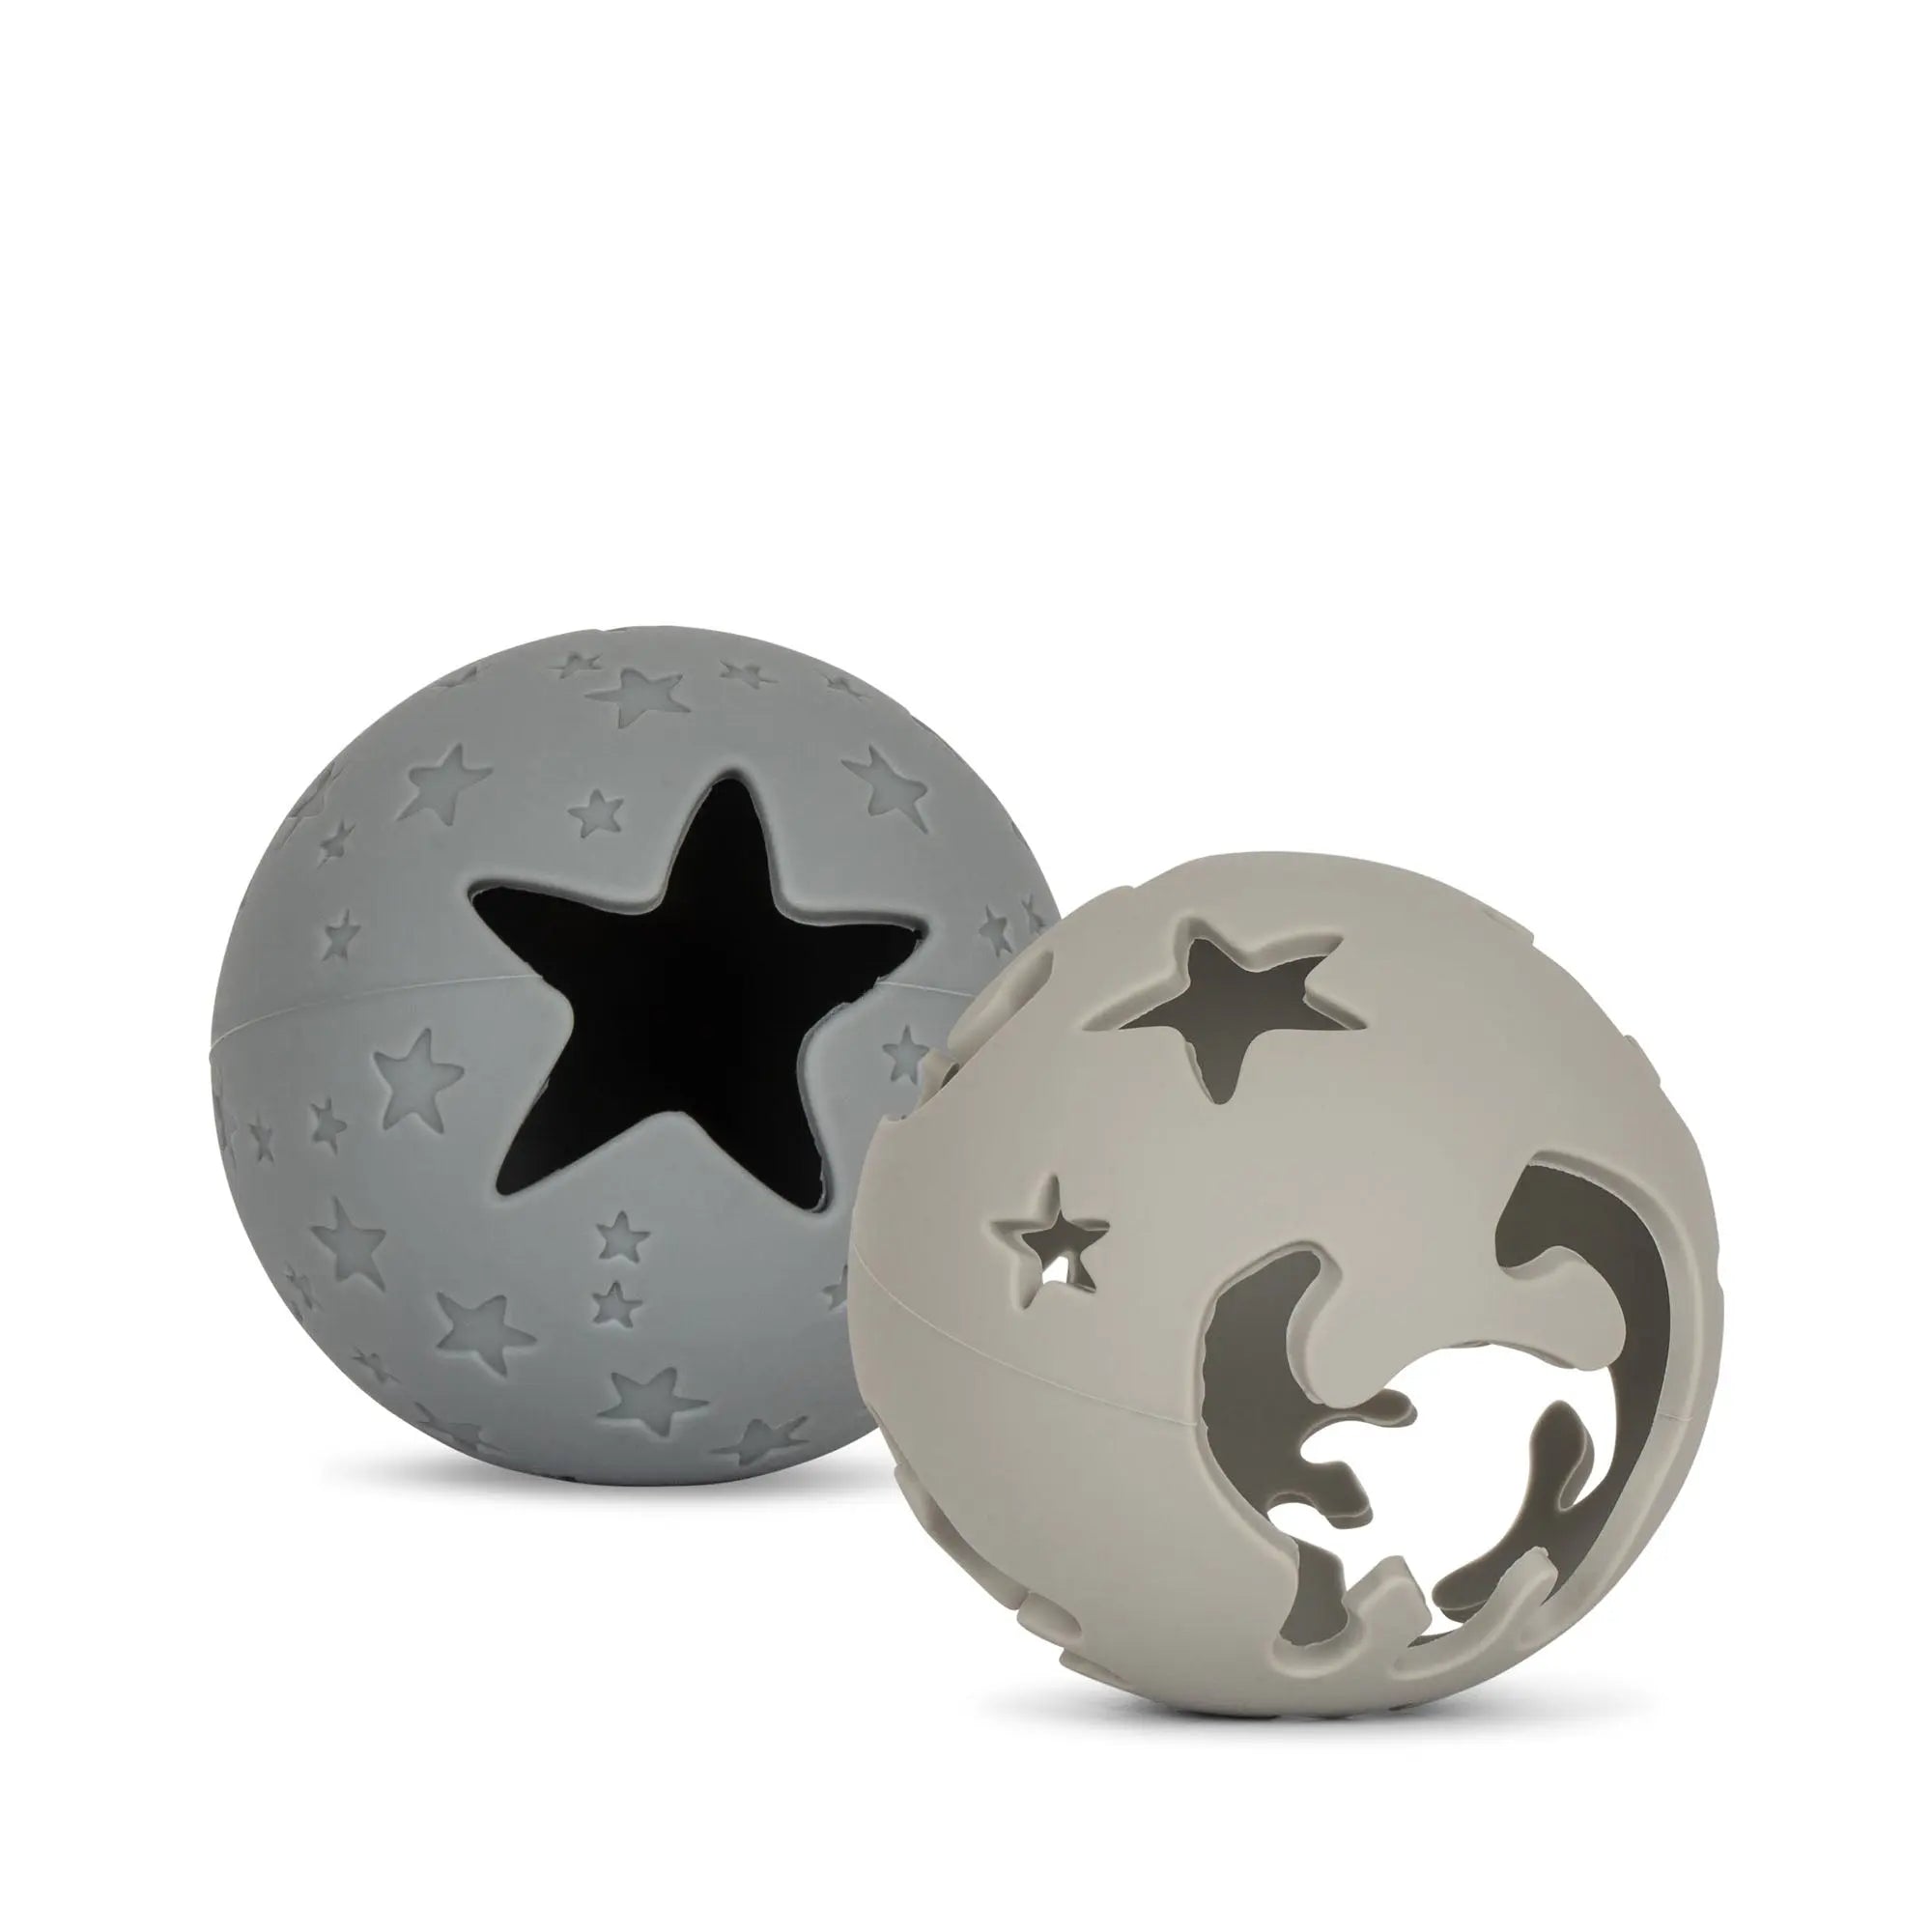 Ceramic Baby Orb Ball Set - 2-Pack, Star Cut Out Design, Enhance Coordination Skills  Konges Sløjd Quarry Blue Mix One Size 